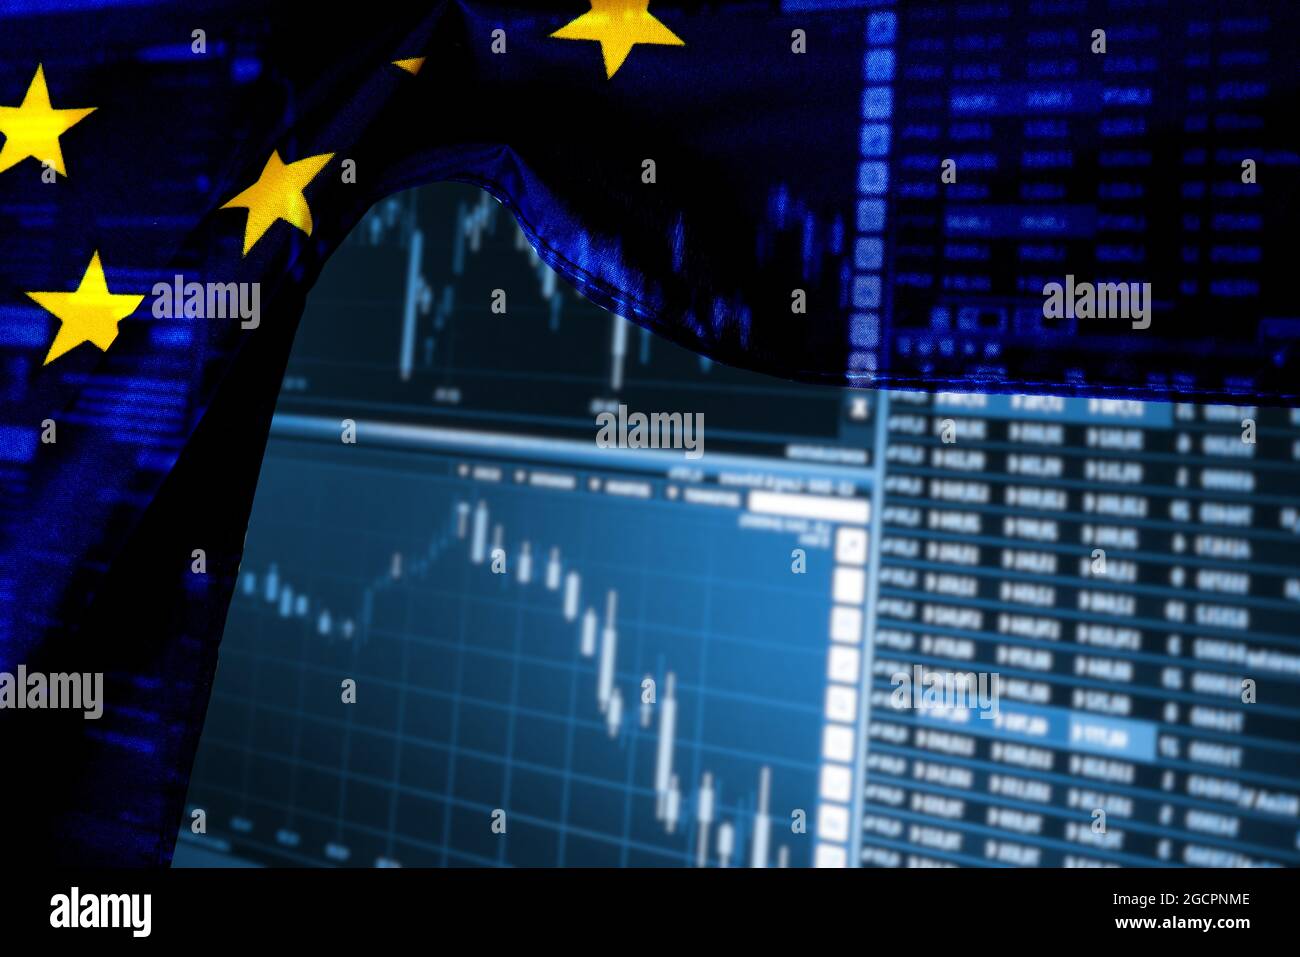 Stock exchange, price board and flag of the European Union EU Stock Photo